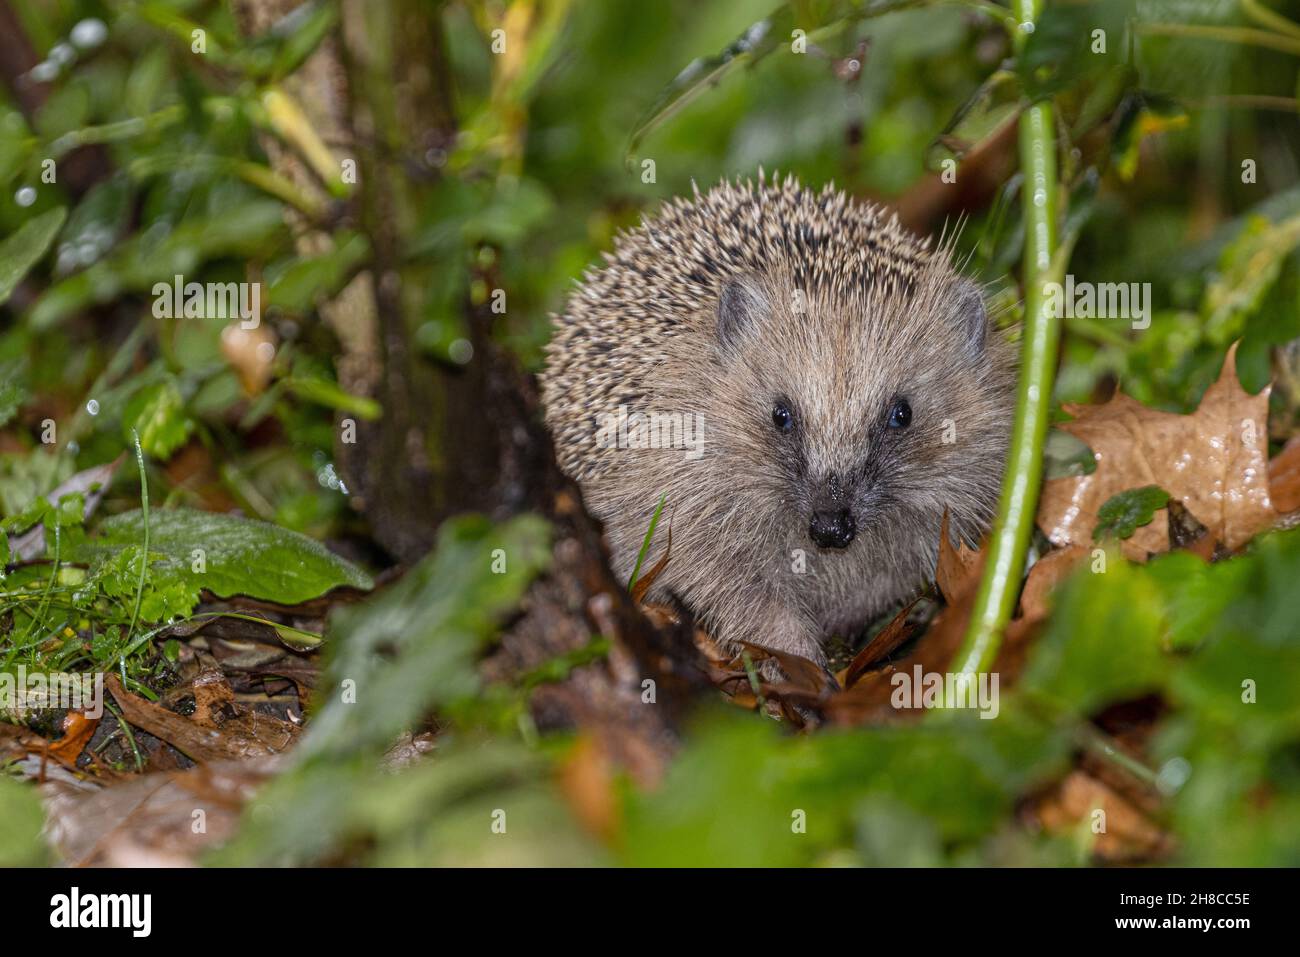 Hedgehog occidentale, hedgehog europeo (Erinaceus europaeus), camminando attraverso un prato umido con foglie cadute a fine autunno, vista frontale, Foto Stock